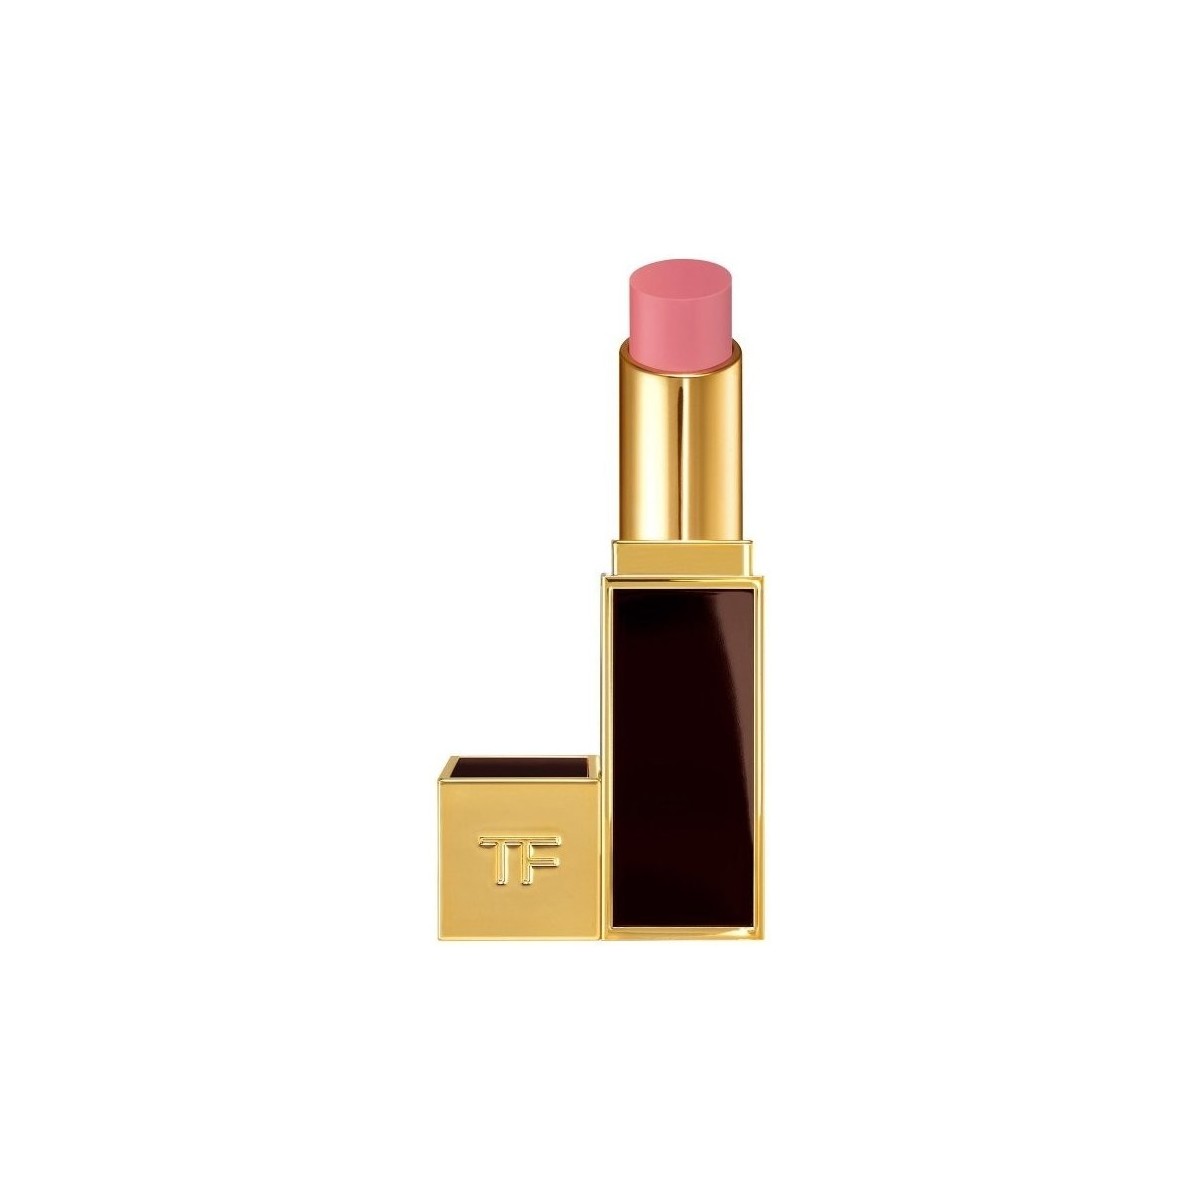 Belleza Mujer Perfume Tom Ford Lip Colour Satin Matte 3g - 11 Notorious Lip Colour Satin Matte 3g - 11 Notorious